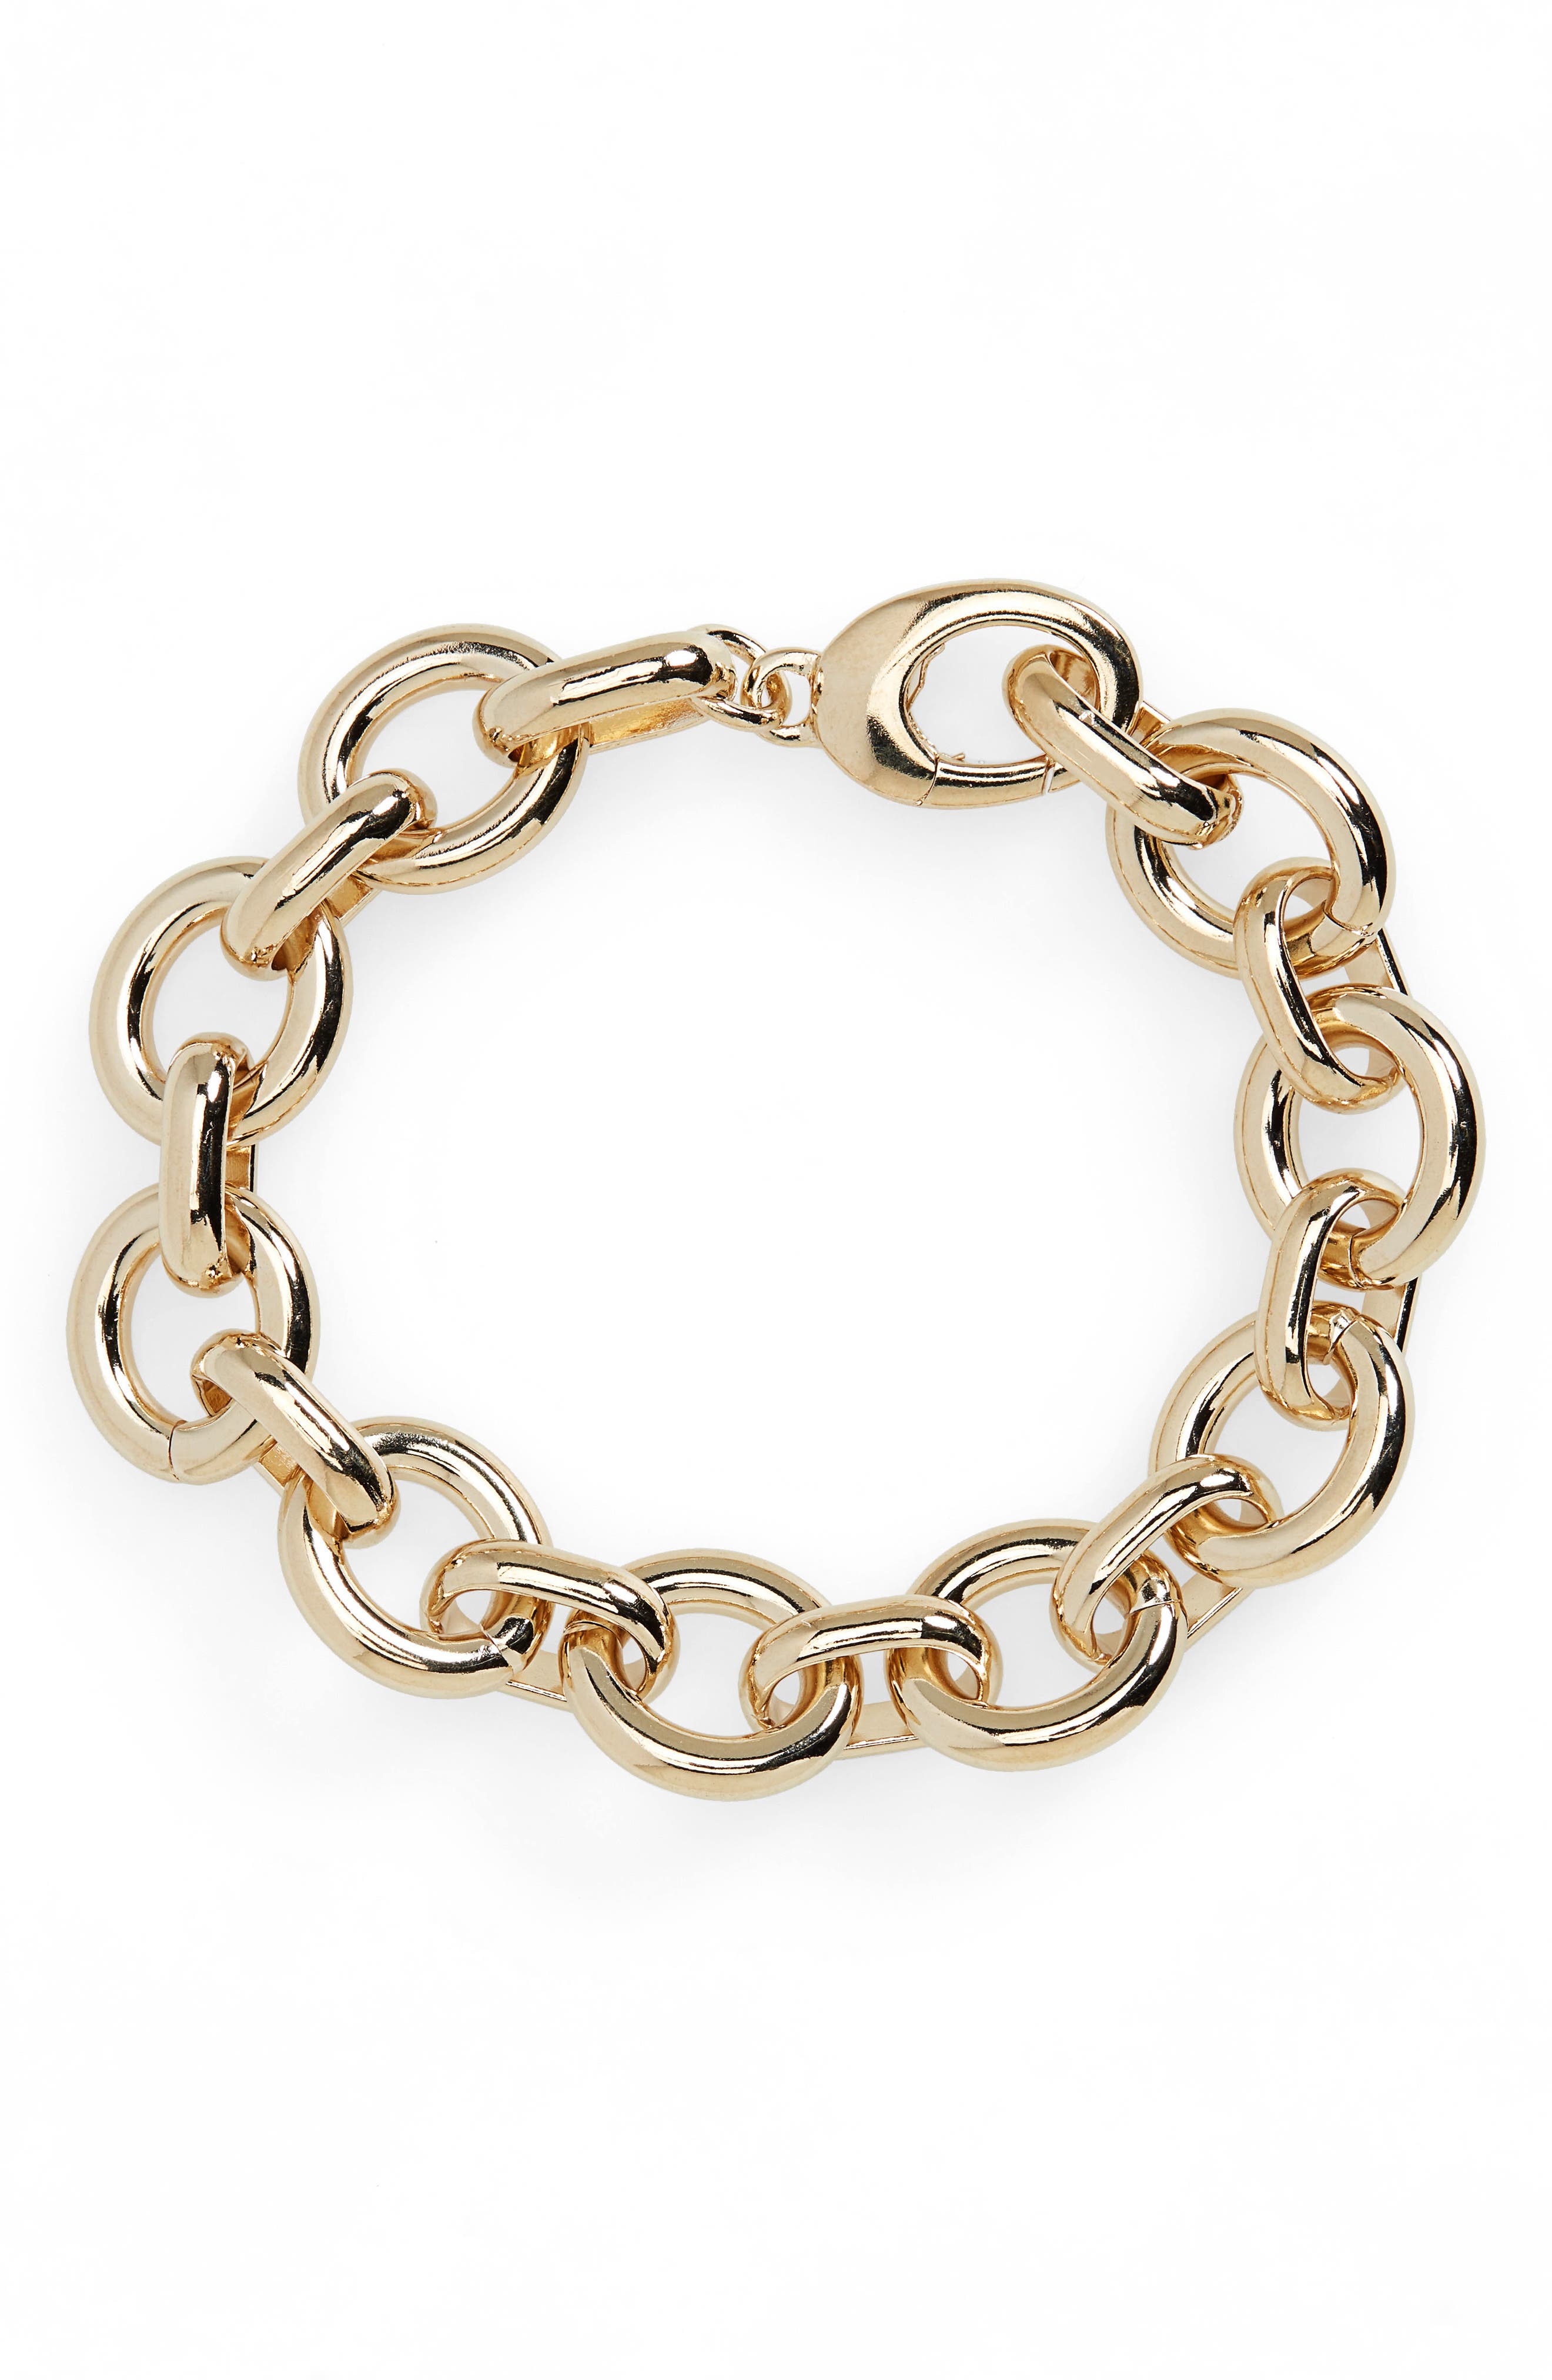 Laura Lombardi Uovo Chain Bracelet in Gold at Nordstrom, Size 7 In Us